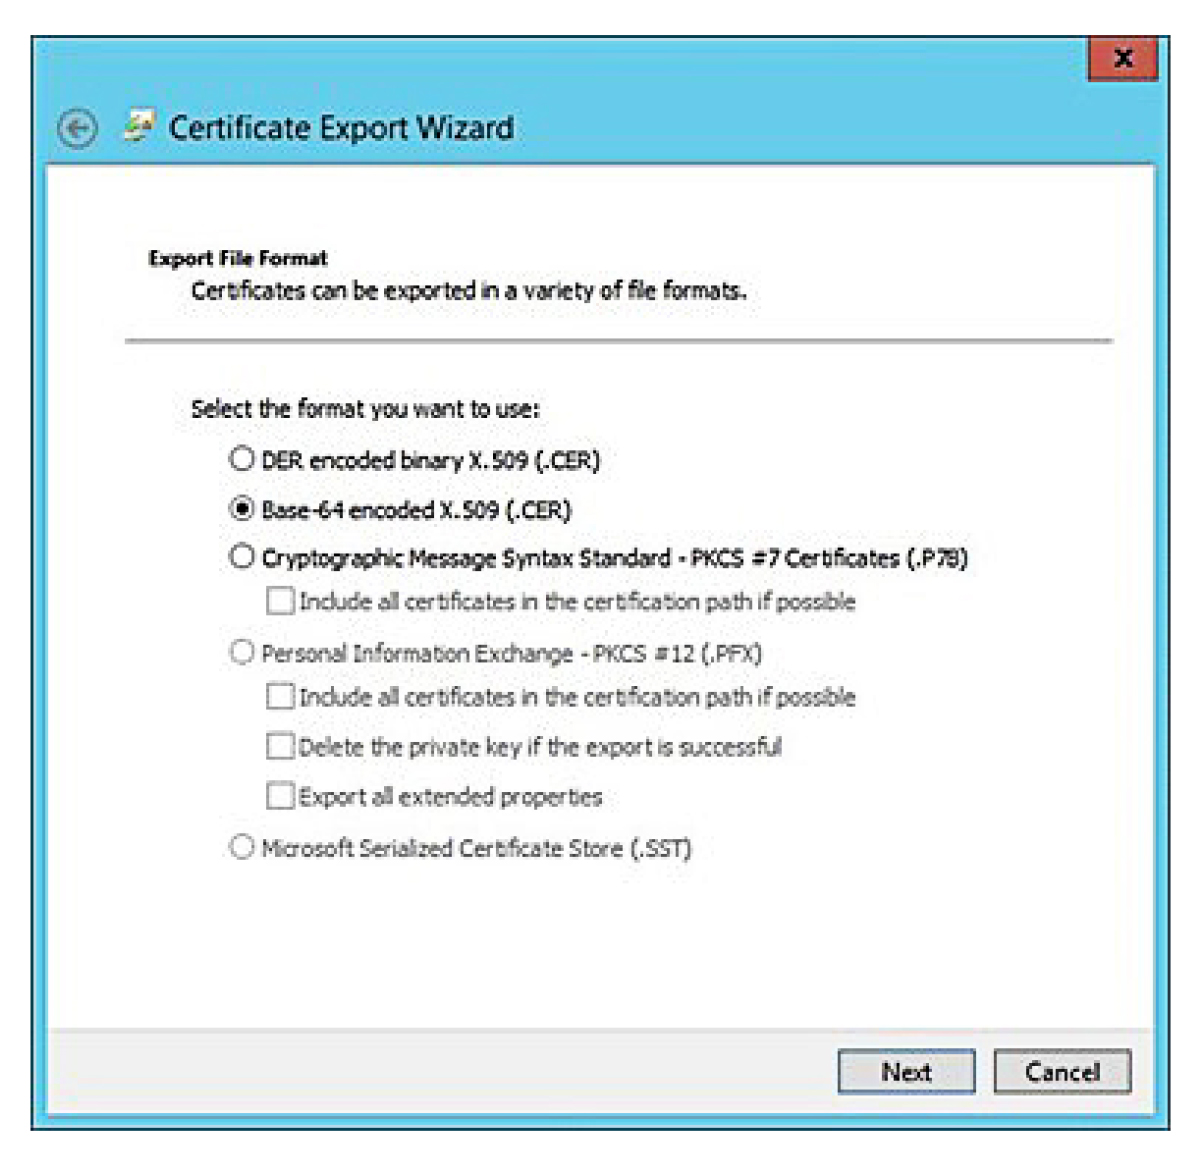 A screenshot showing the Certificate Export Wizard window.